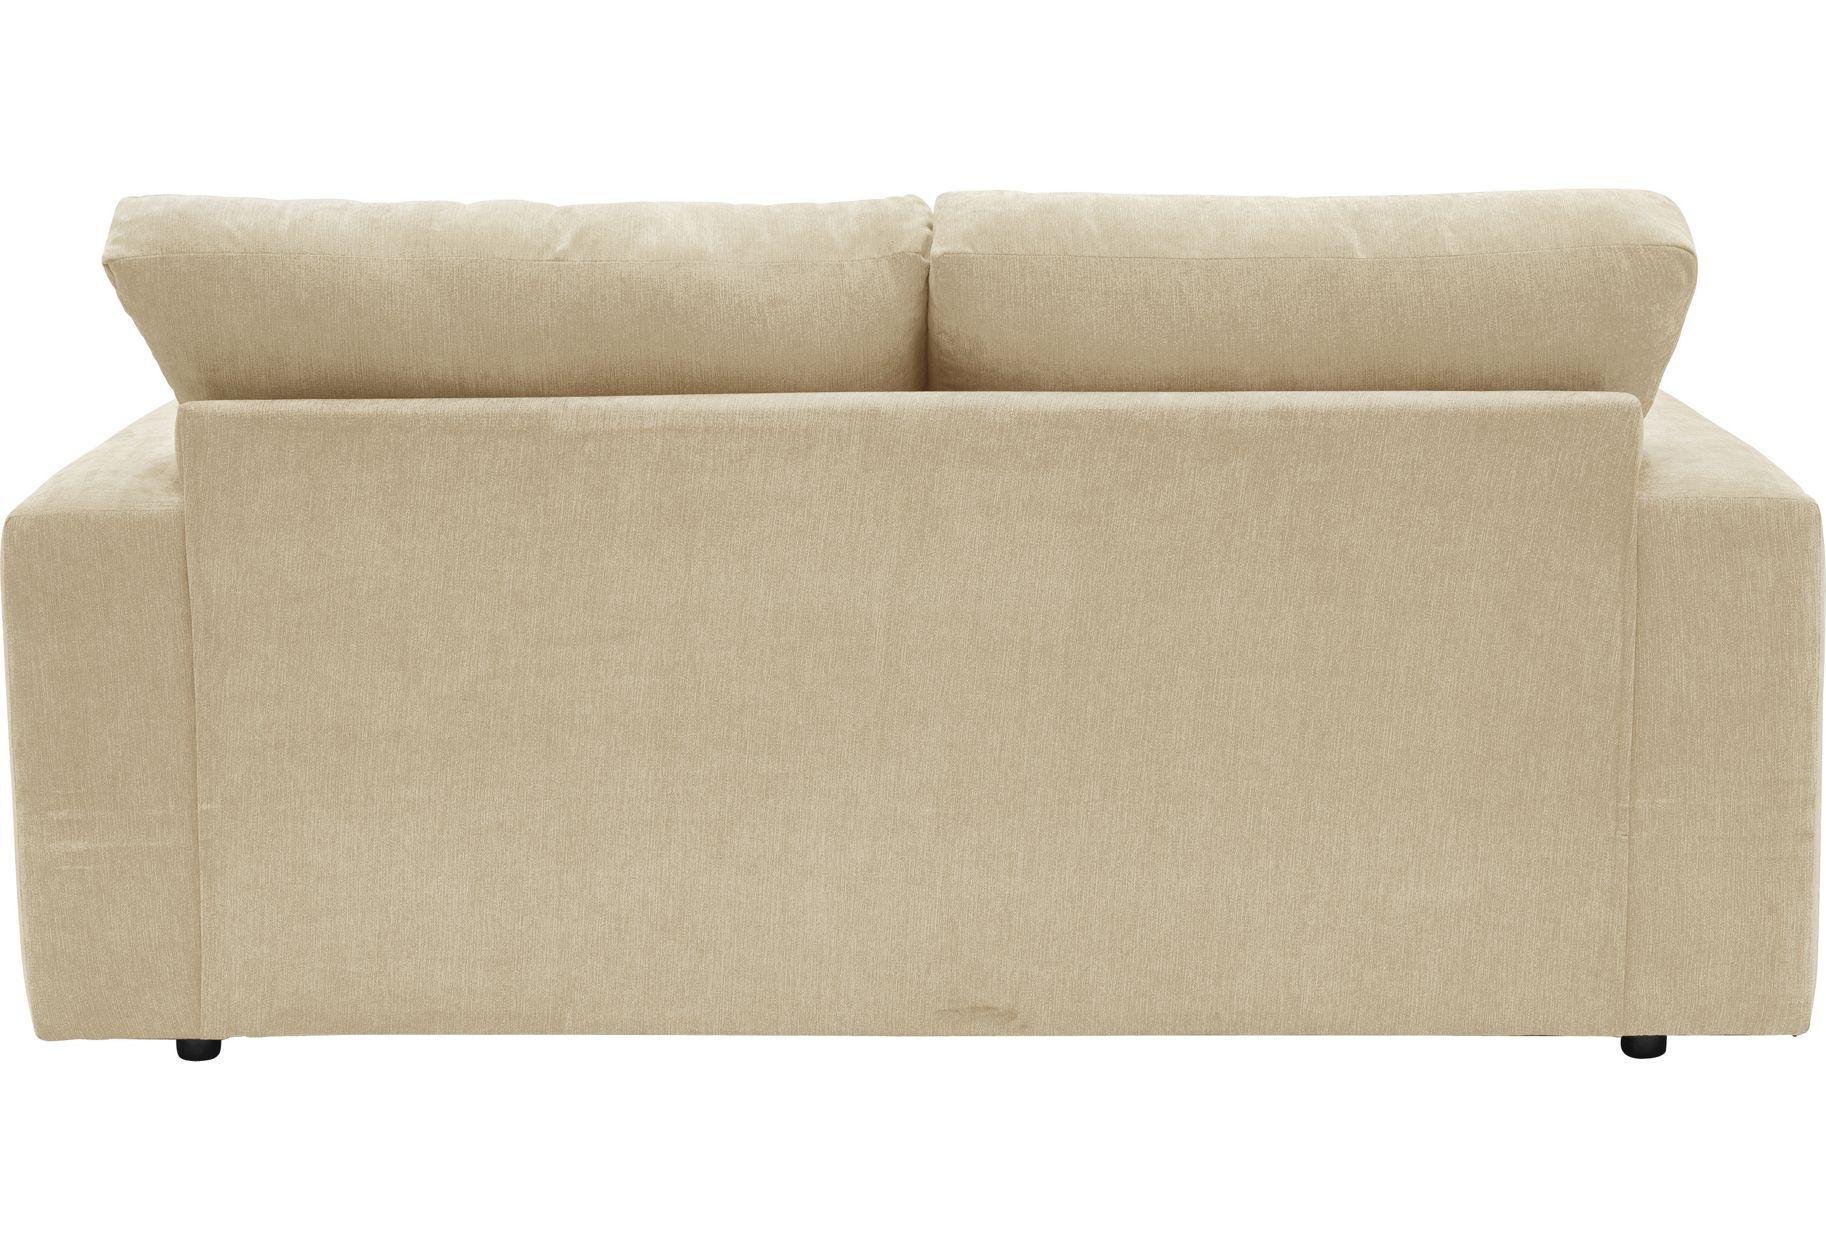 Argos Home Eton 2 Seater Fabric Sofa Bed - Mink